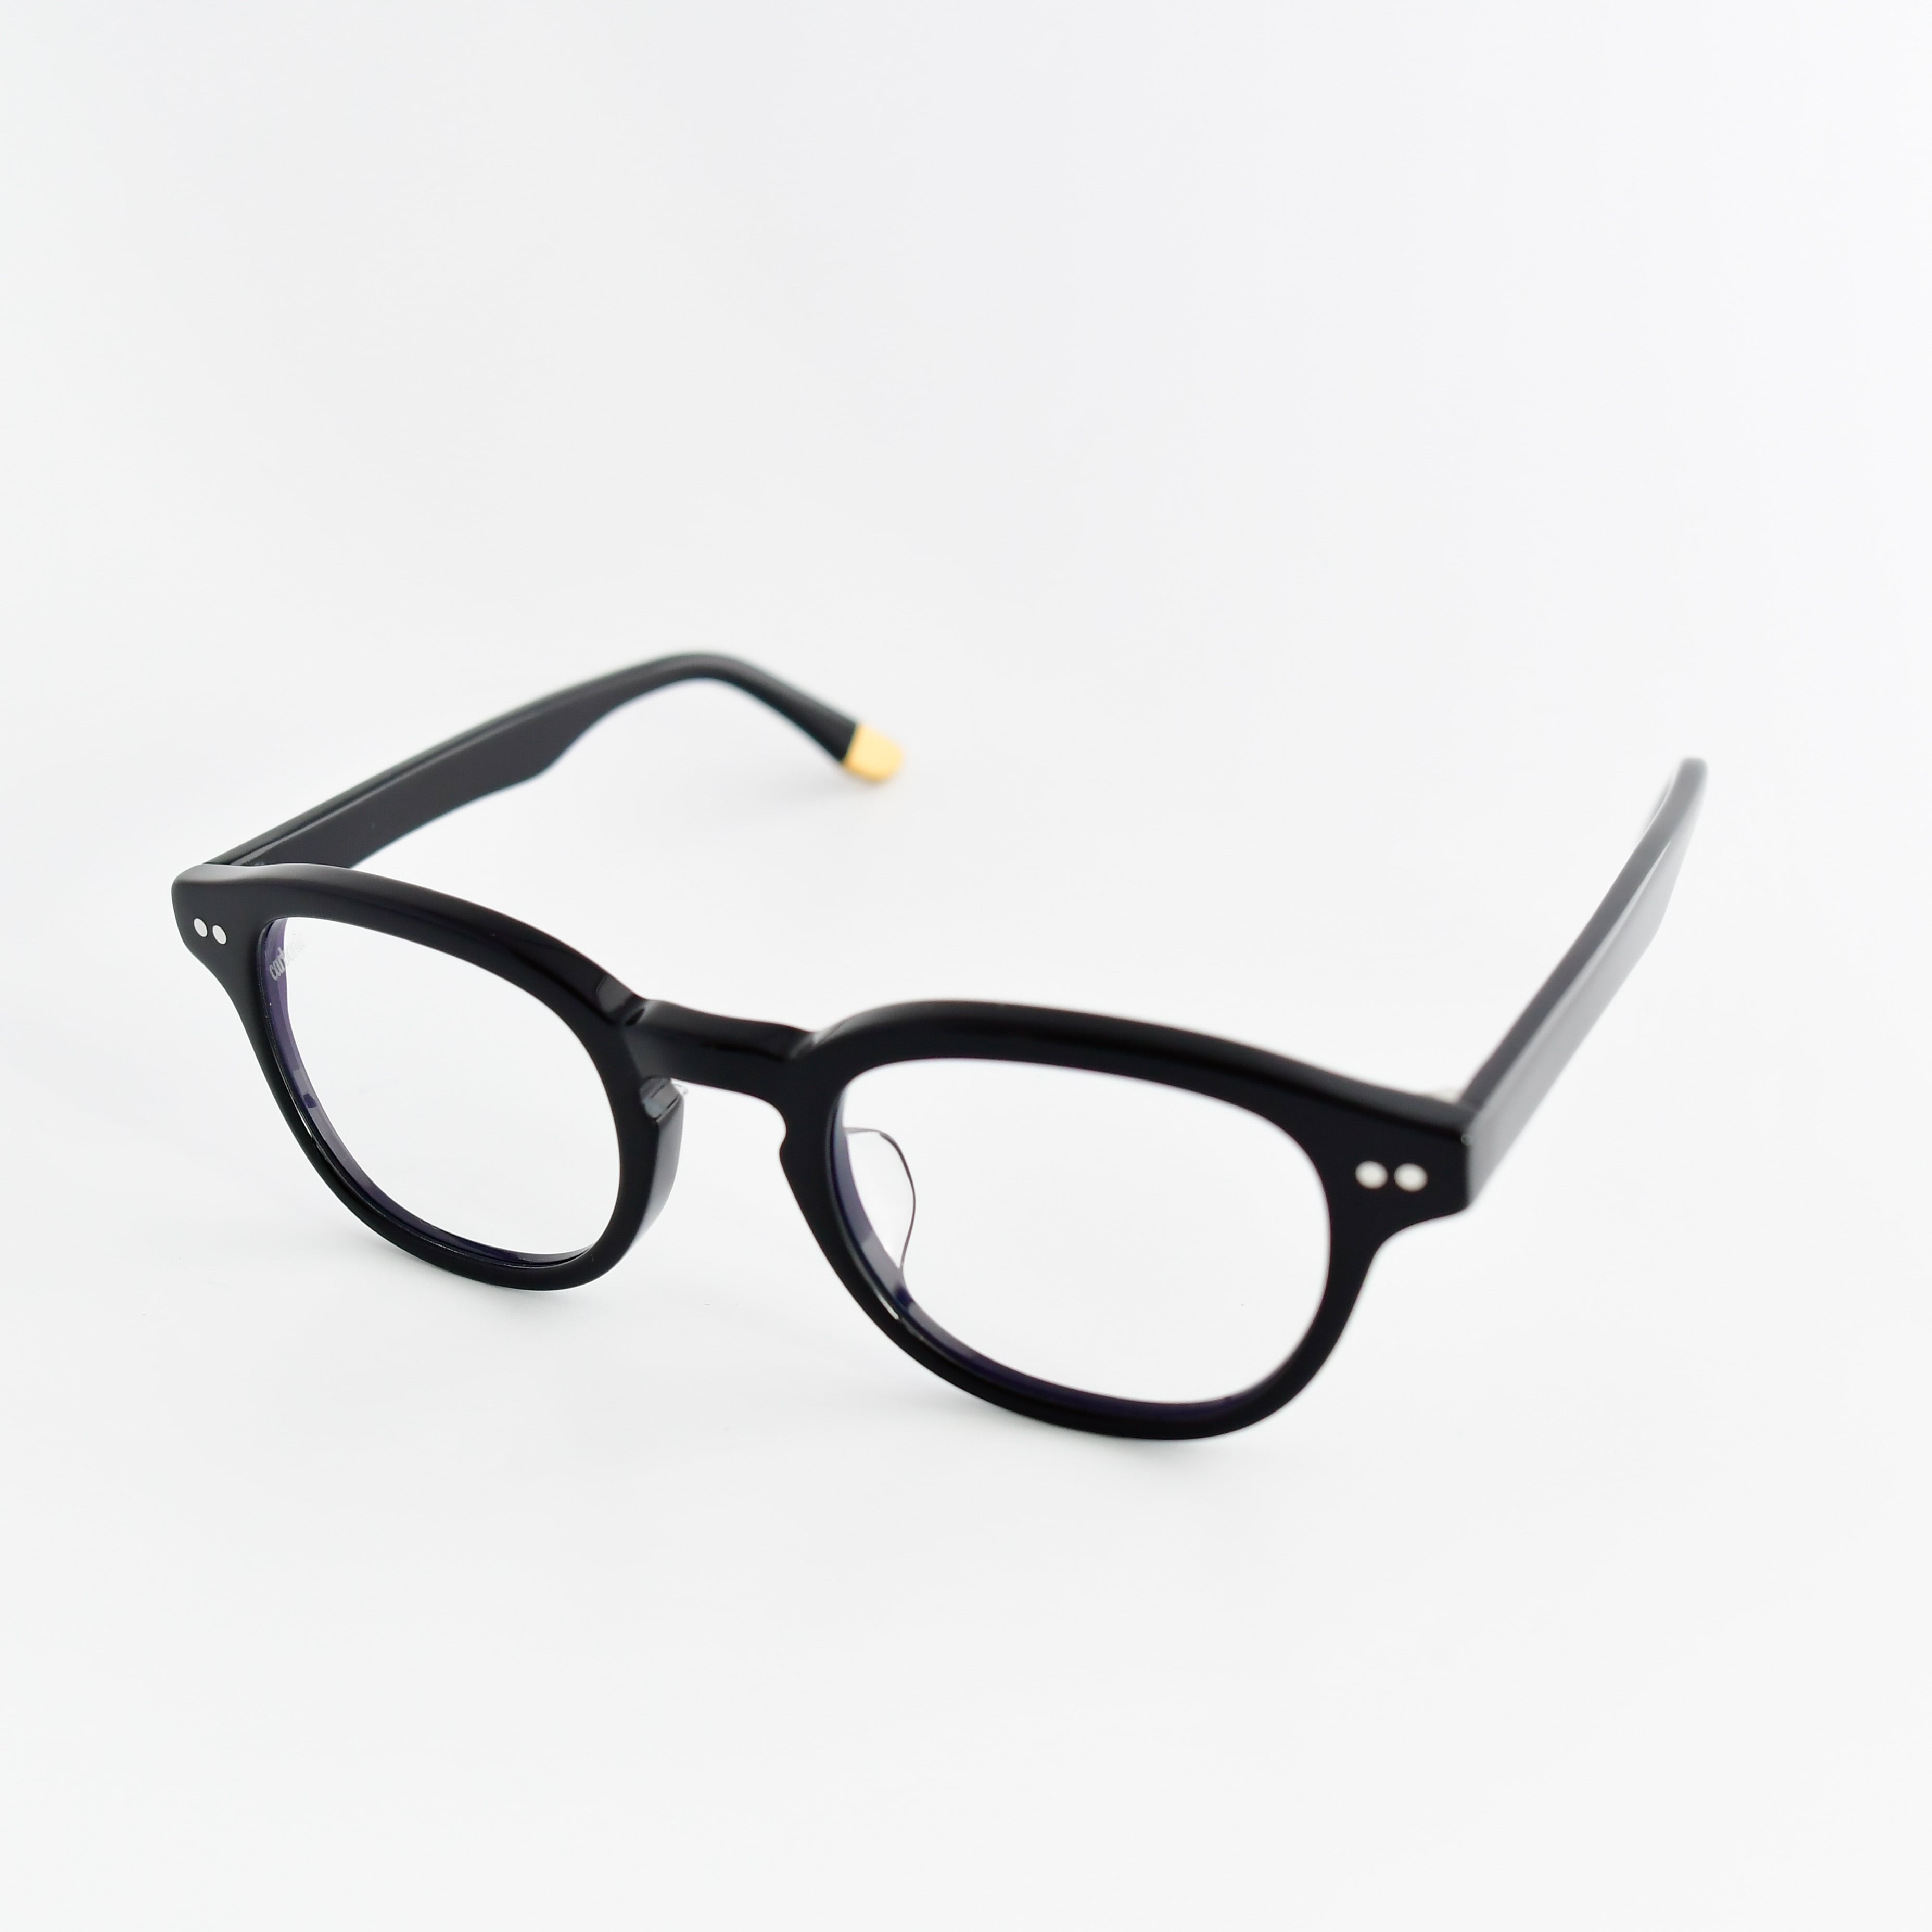 carbonic × SABRE duster pc glasses